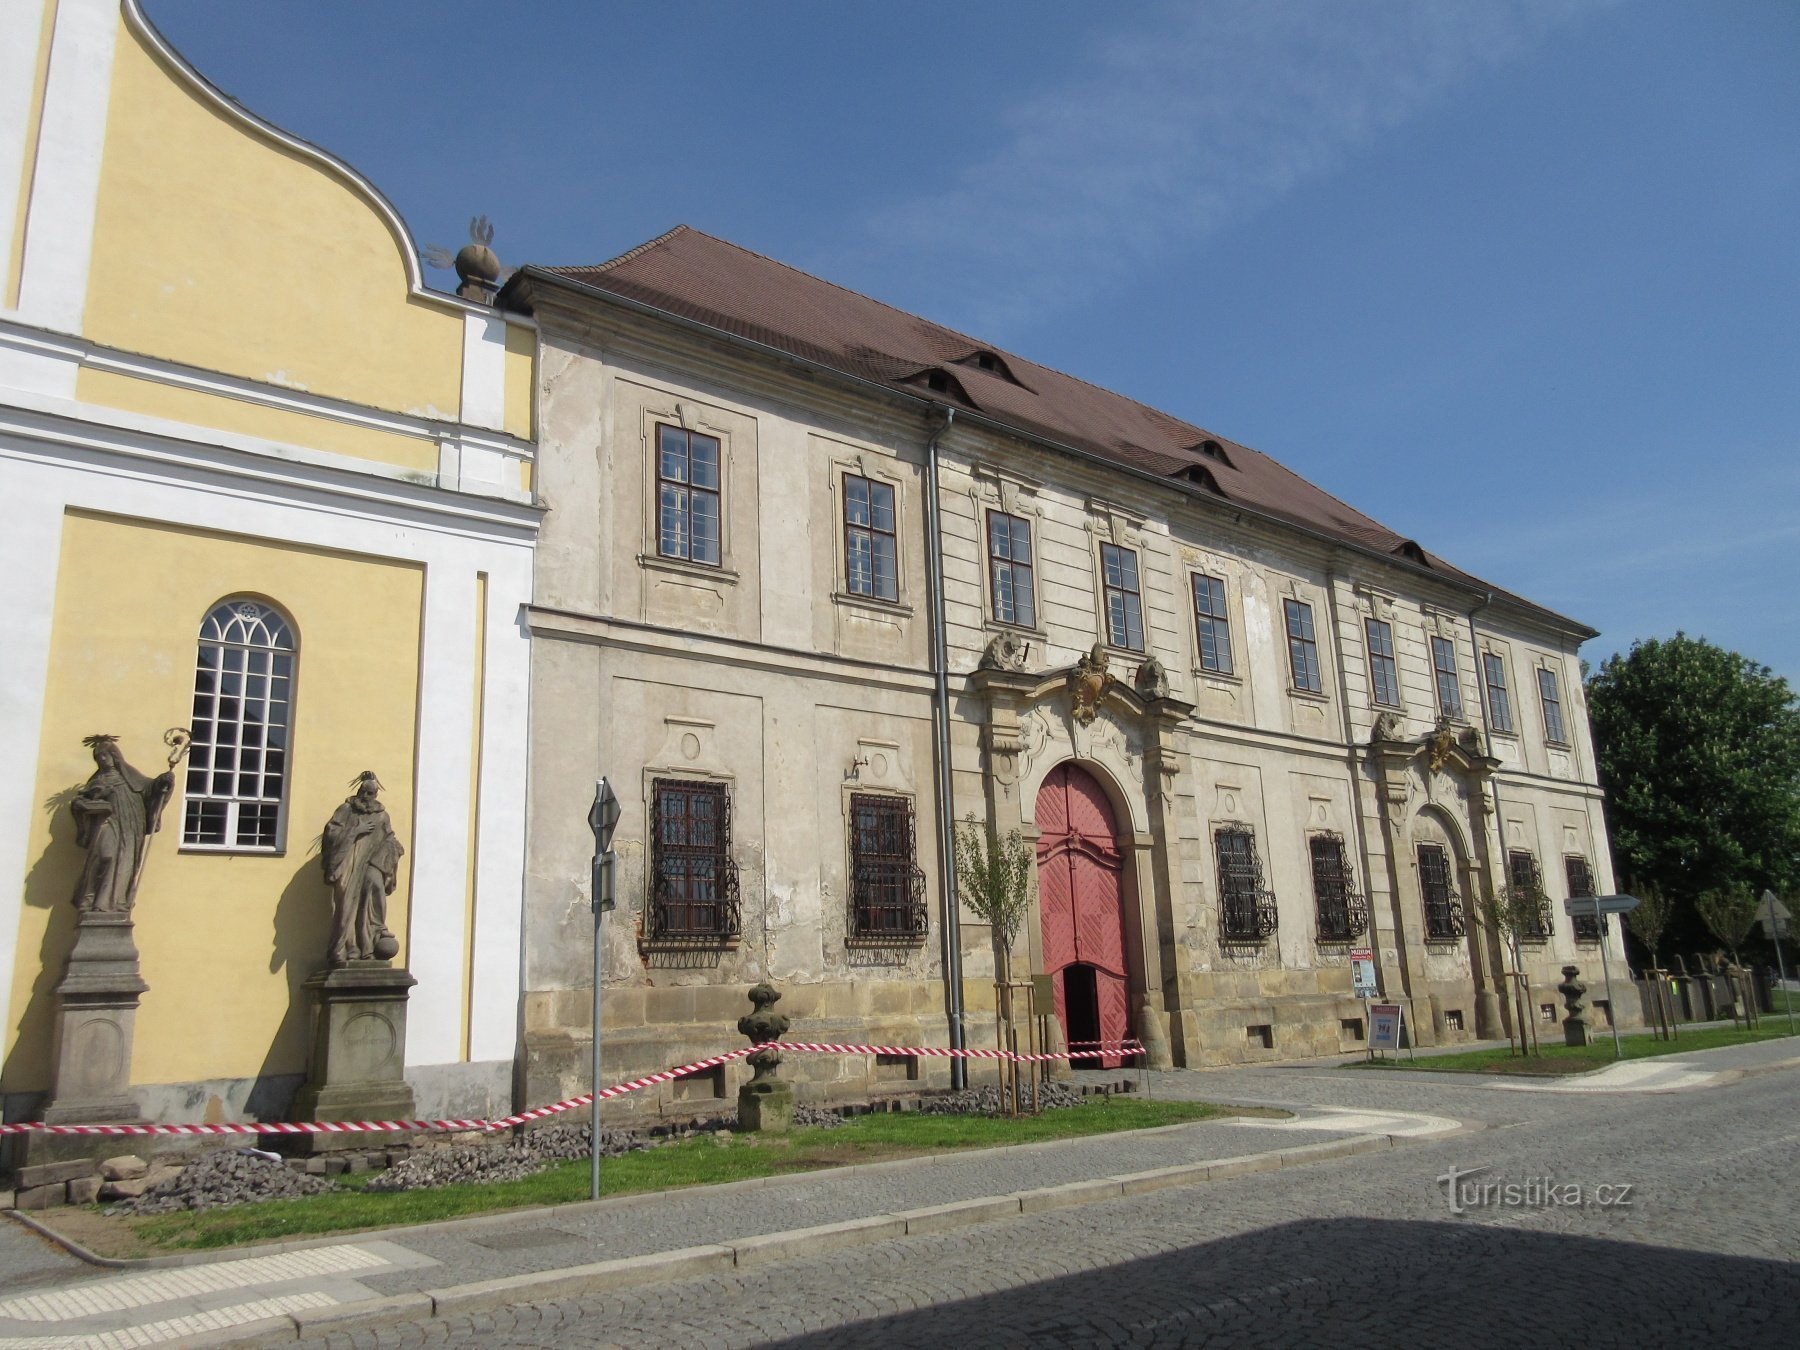 Kloster - nu ett museum